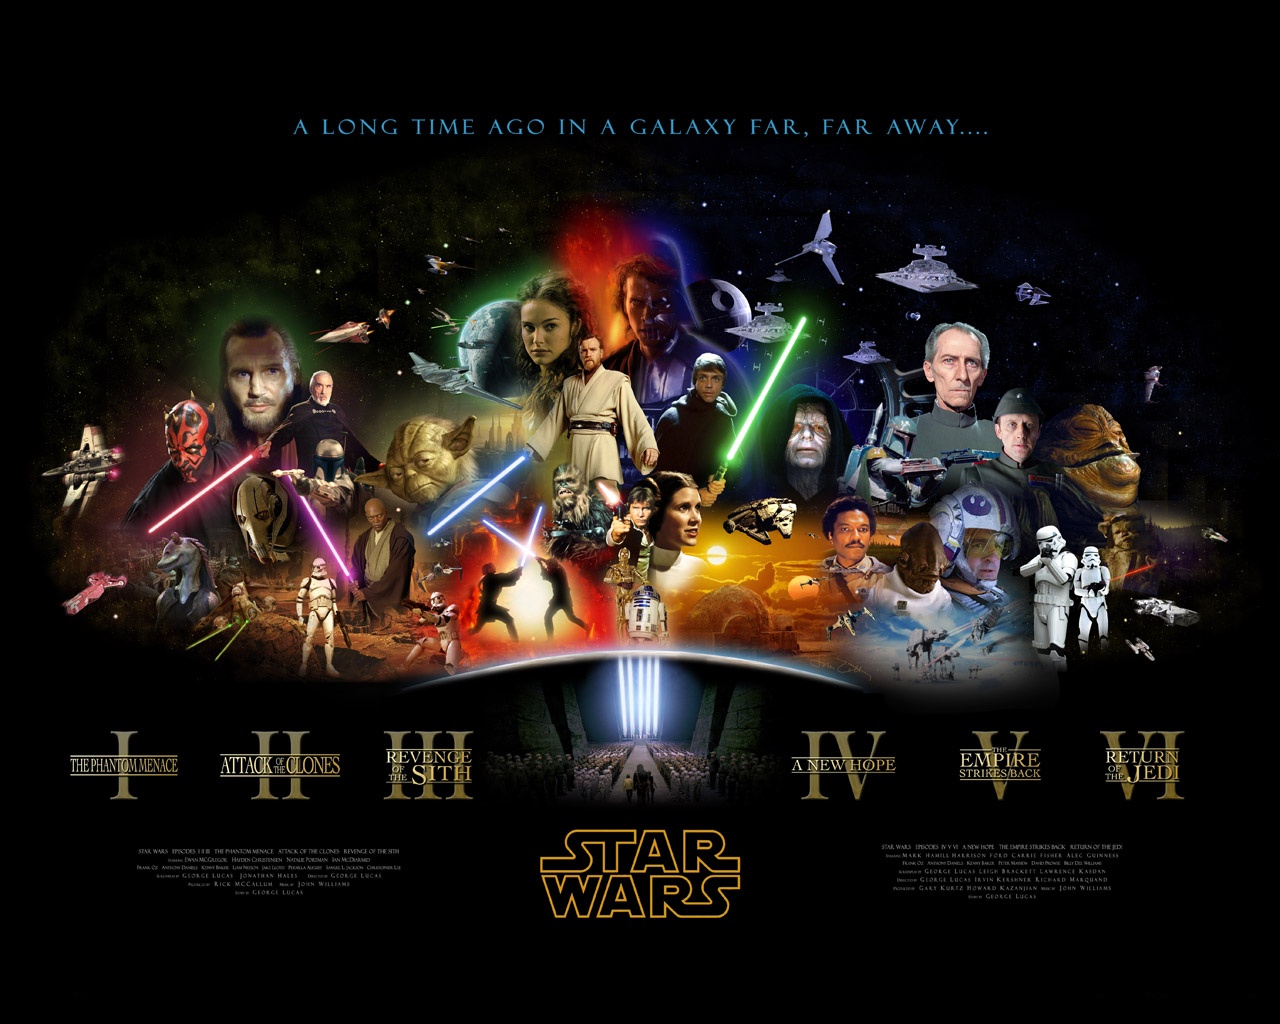 "Star Wars" desktop wallpaper (1280 x 1024 pixels, Old Version)